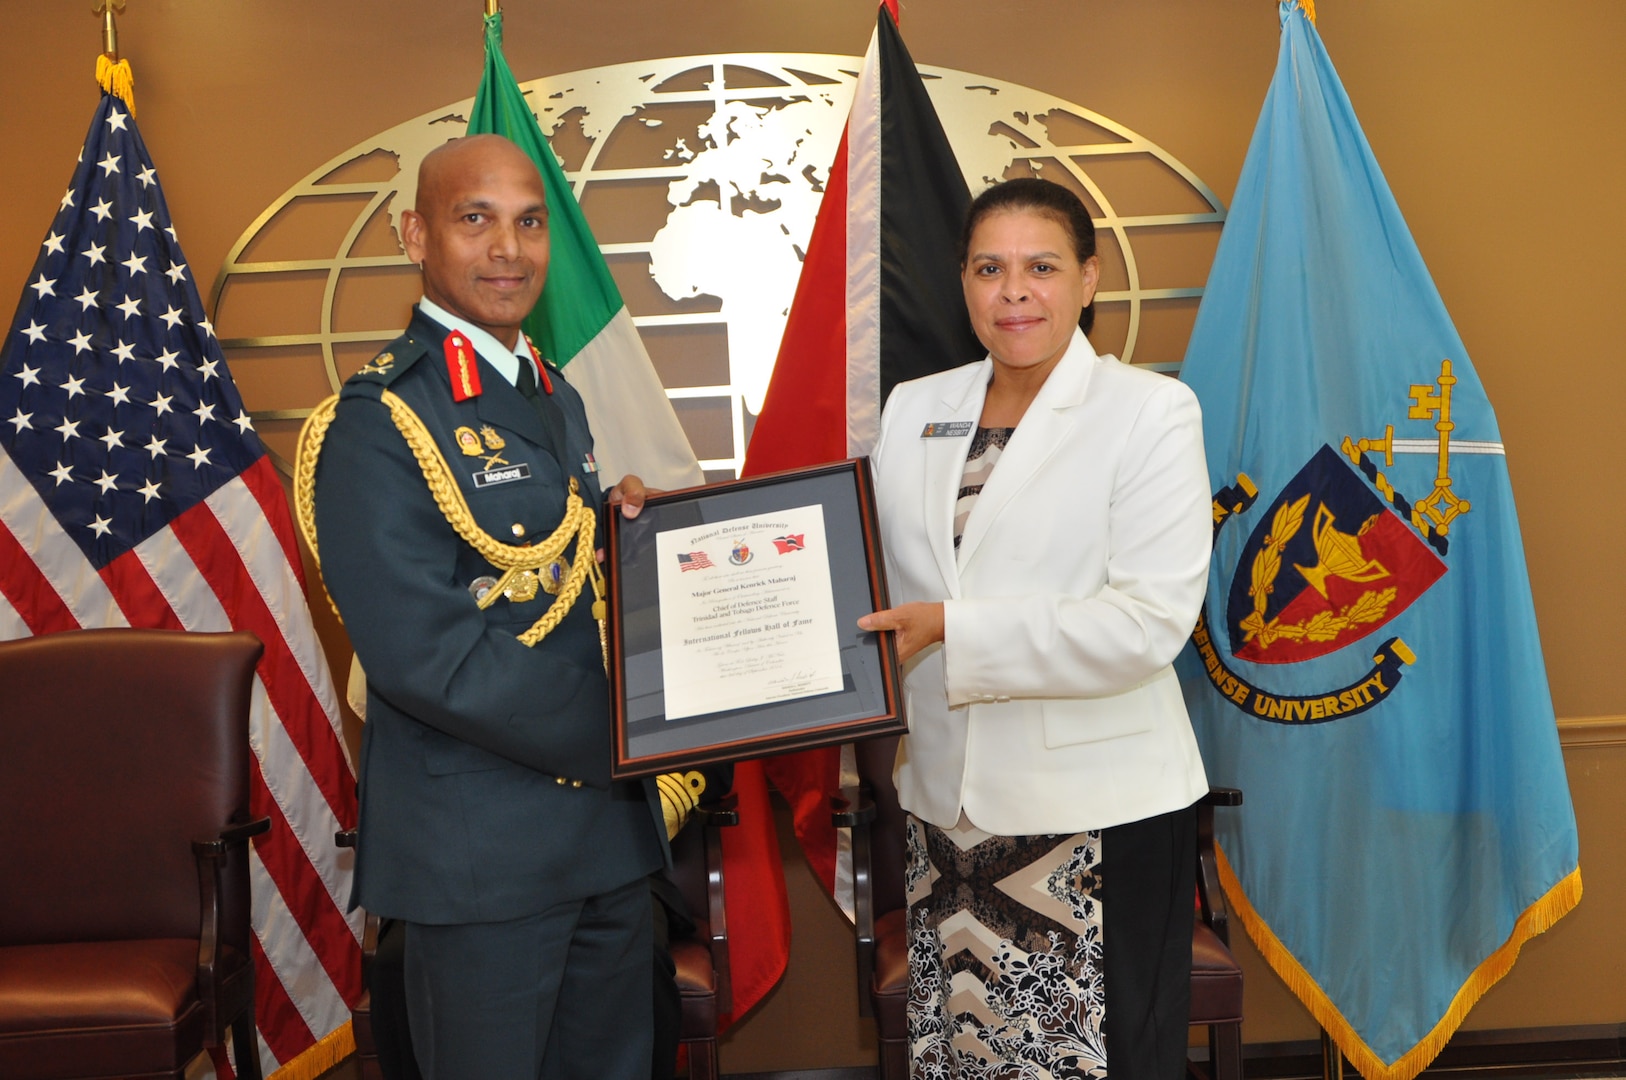 NDU Interim President Ambassador Wanda L. Nesbitt presents Major General Kenrick Maharaj of Trinidad and Tobago with a certificate confirming his induction into the International Fellows Hall of Fame on September 3, 2014.